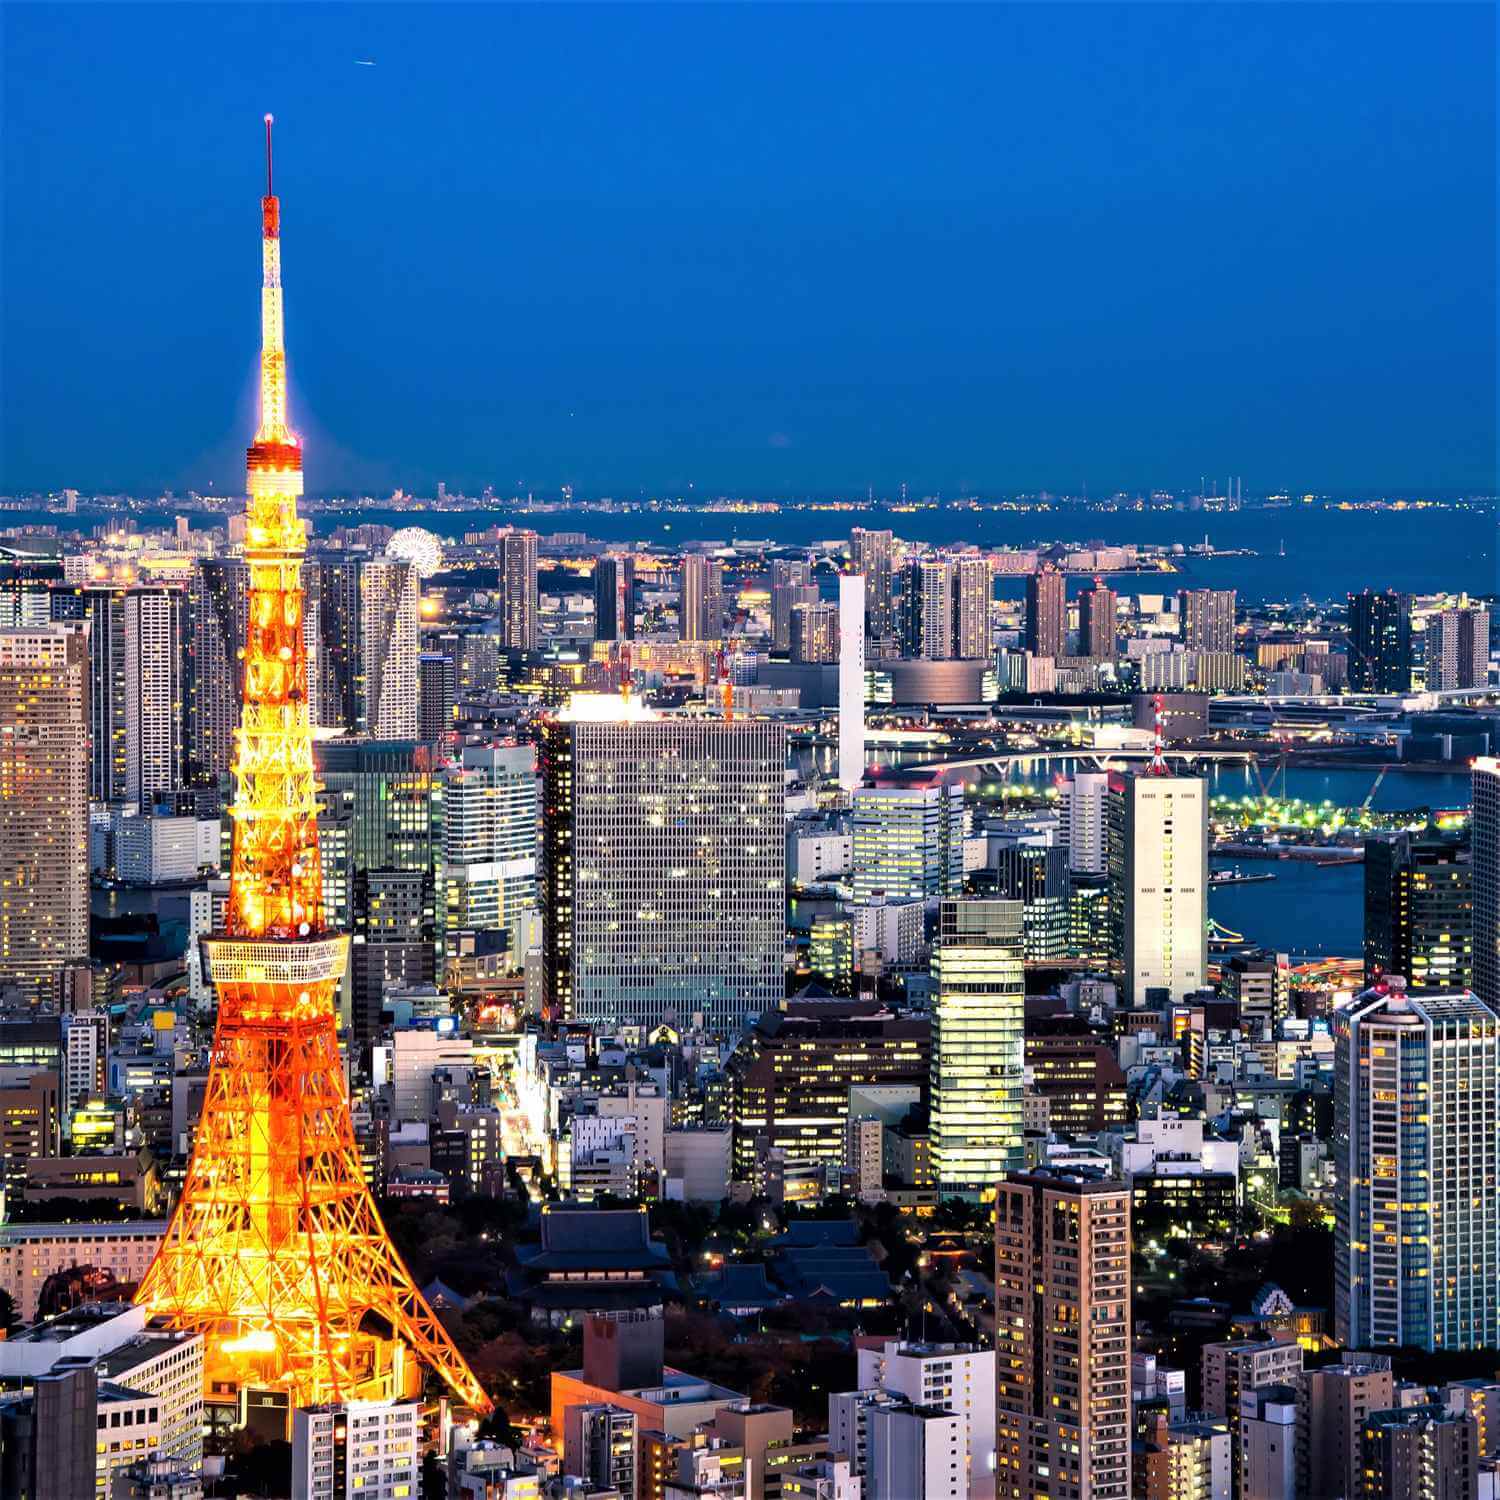 Roppongi Hills Mori Tower in Tokyo = Shutterstock 8